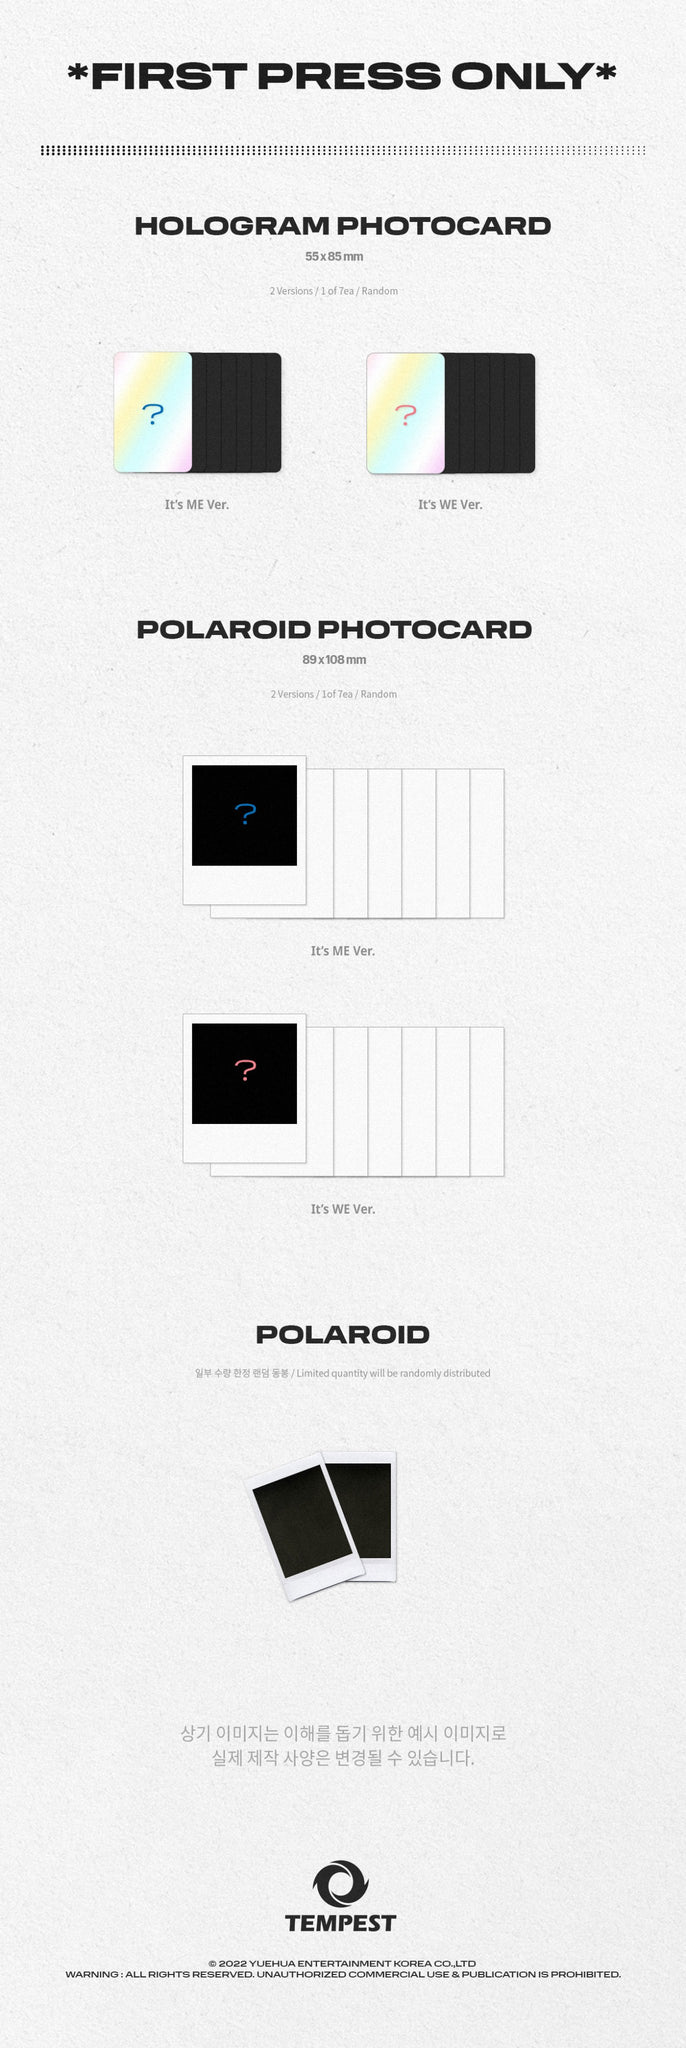 TEMPEST 1st Mini Album It’s ME, It's WE Inclusions 1st Press Only Hologram Photocard Polaroid Photocard Polaroid